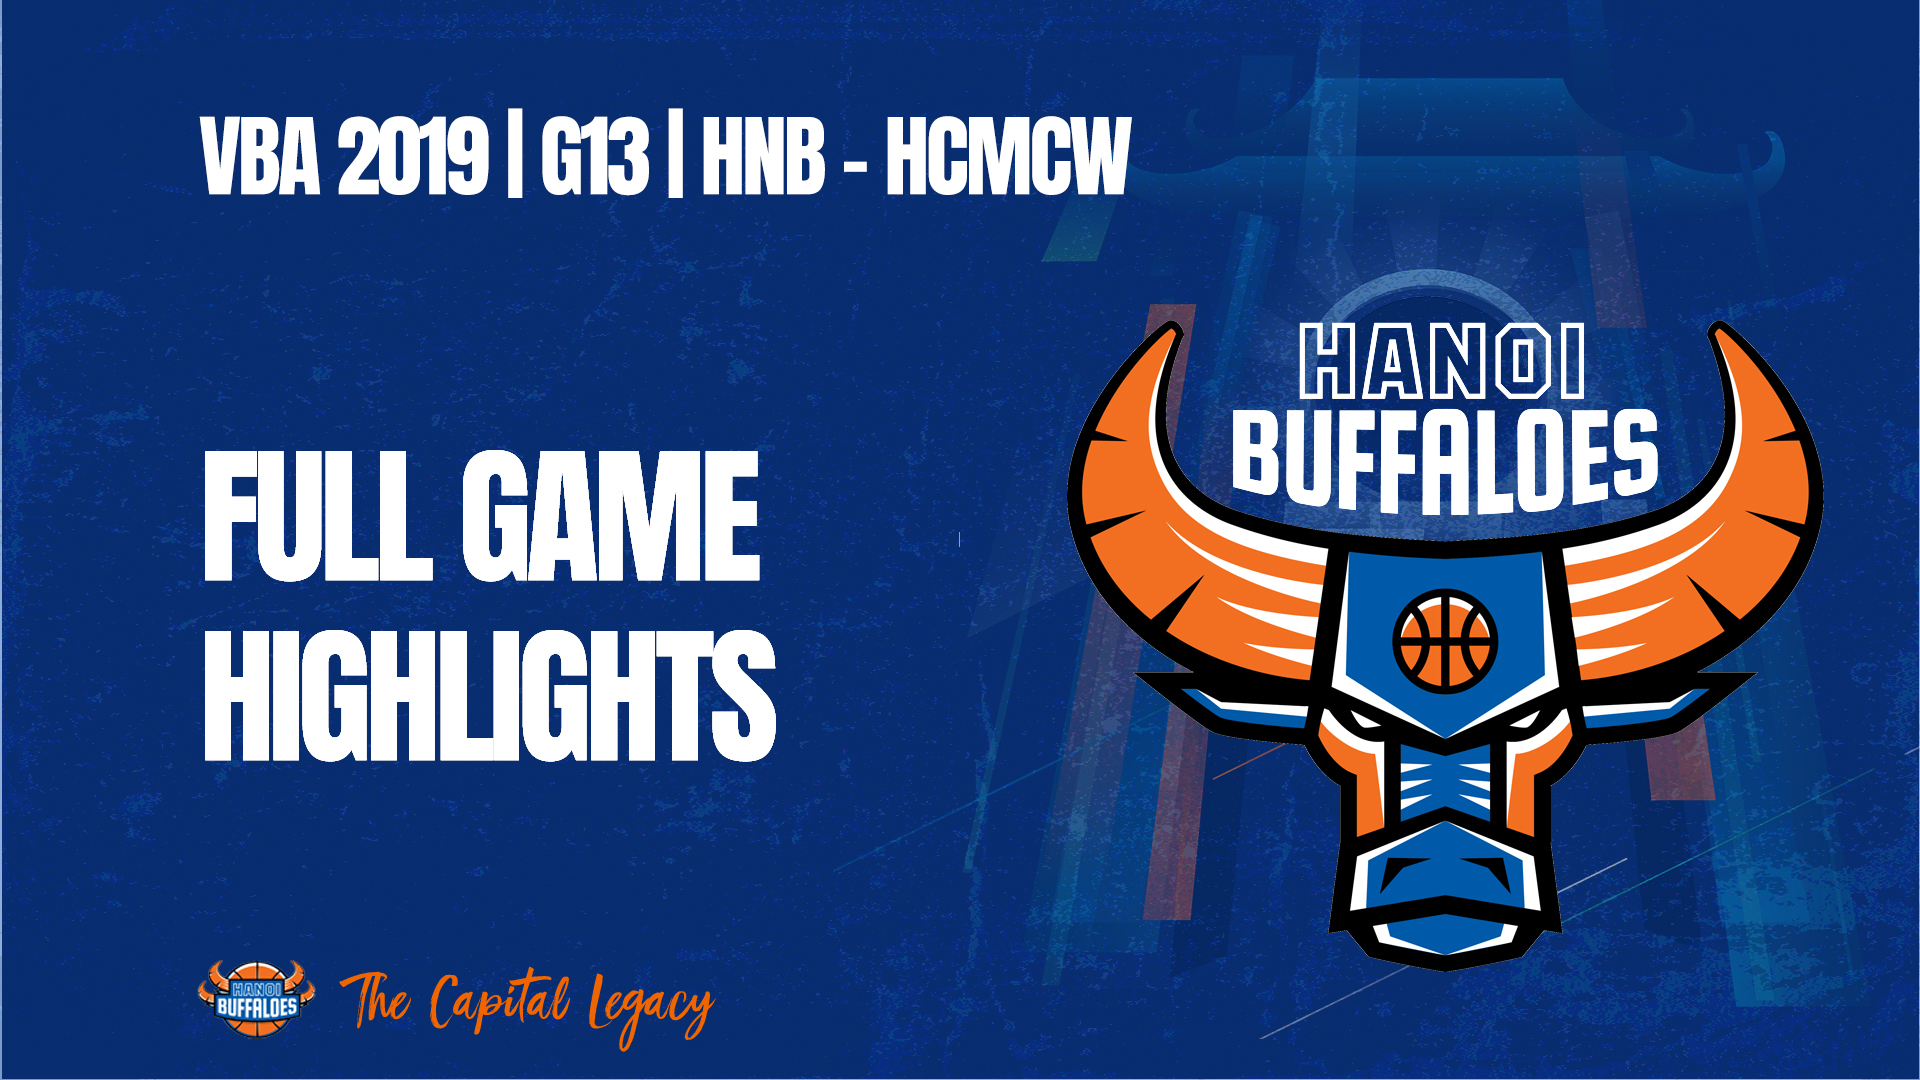 VBA 2019 | Game 13 | HNB vs HCMCW | Full game highlights